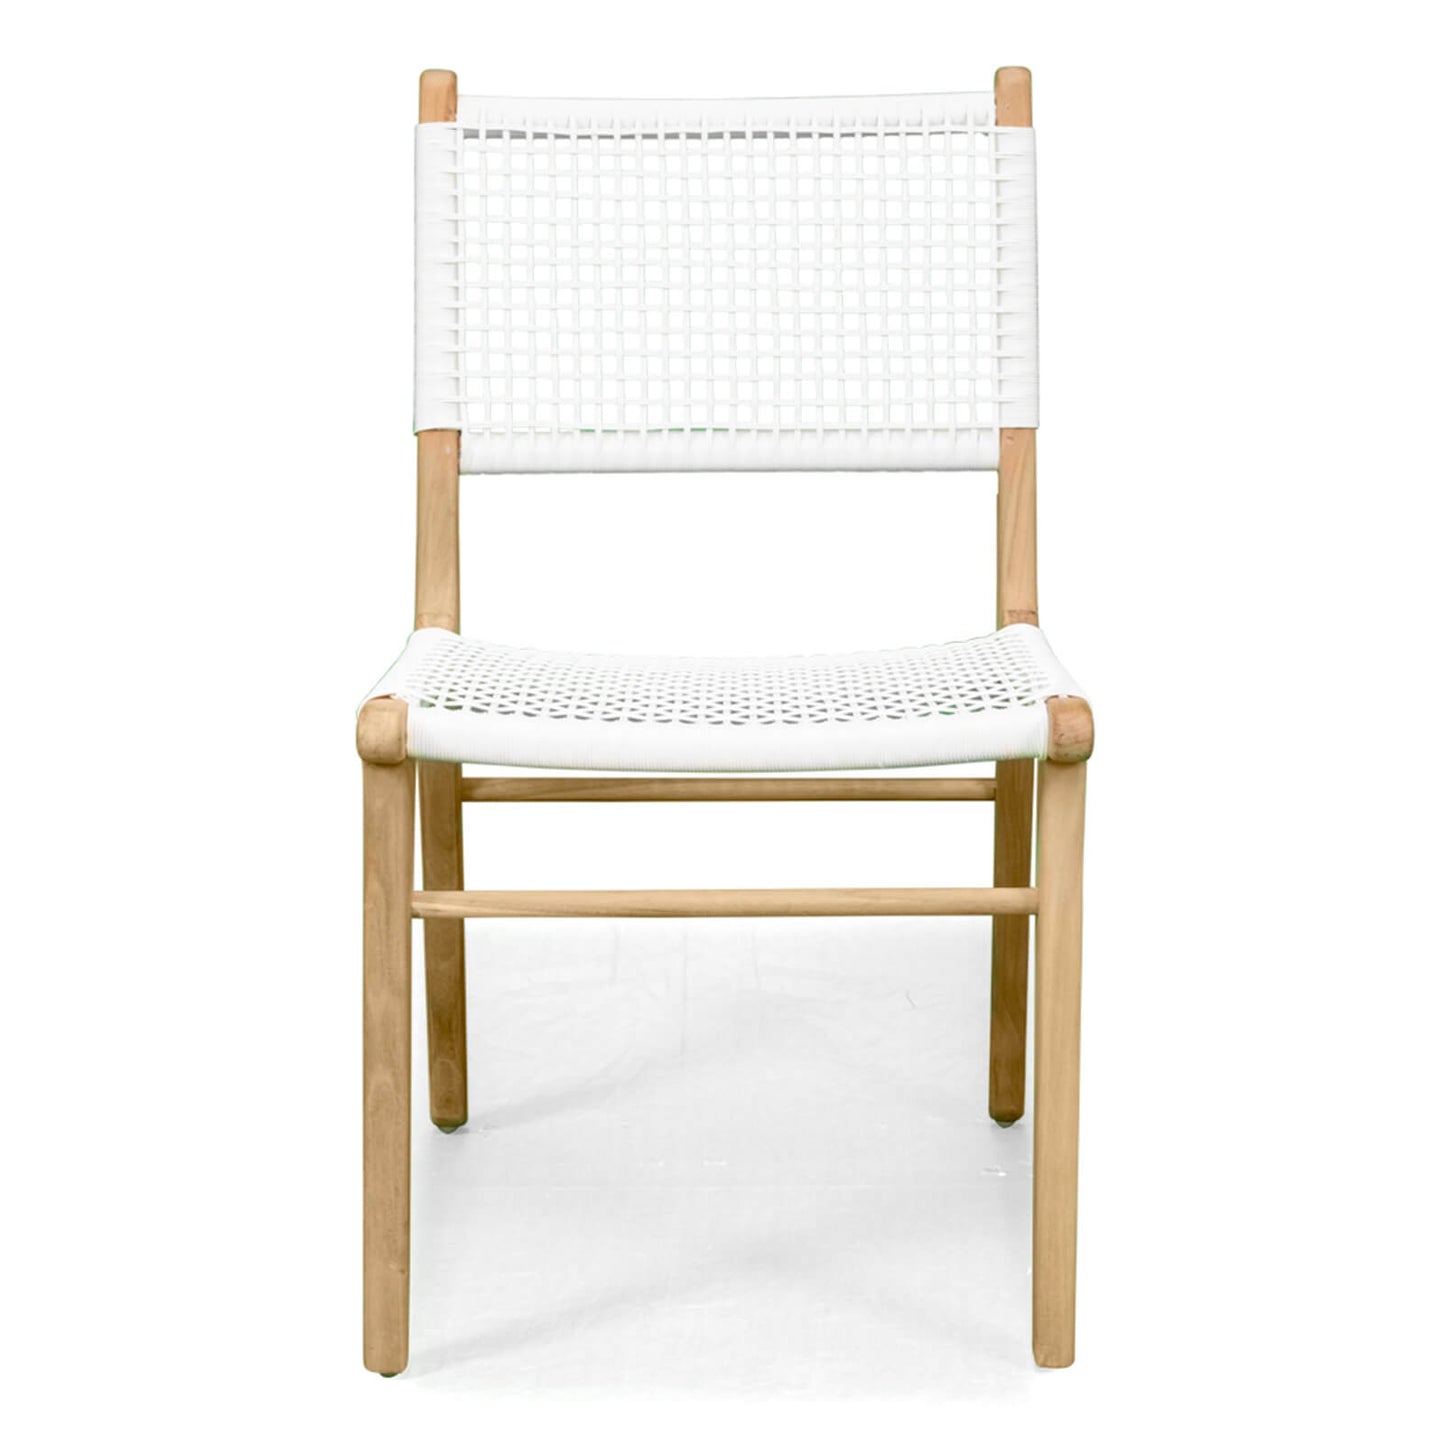 Augusta | Coastal, Mid Century Outdoor Wooden Dining Chair | White